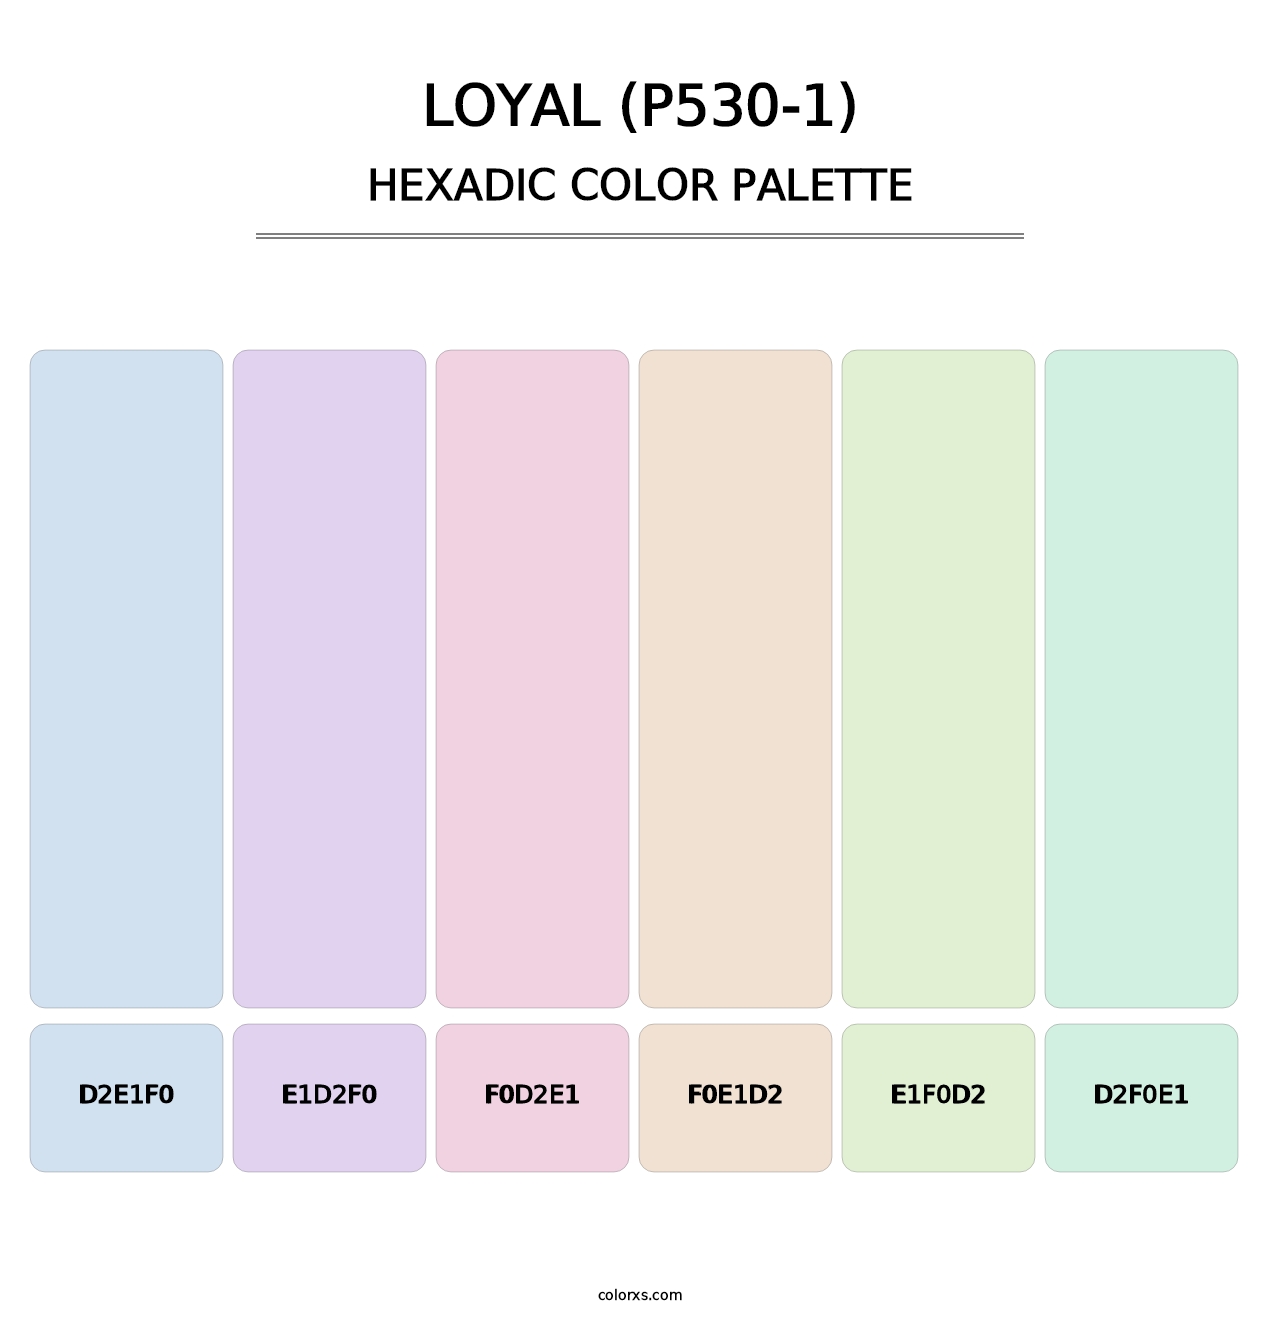 Loyal (P530-1) - Hexadic Color Palette